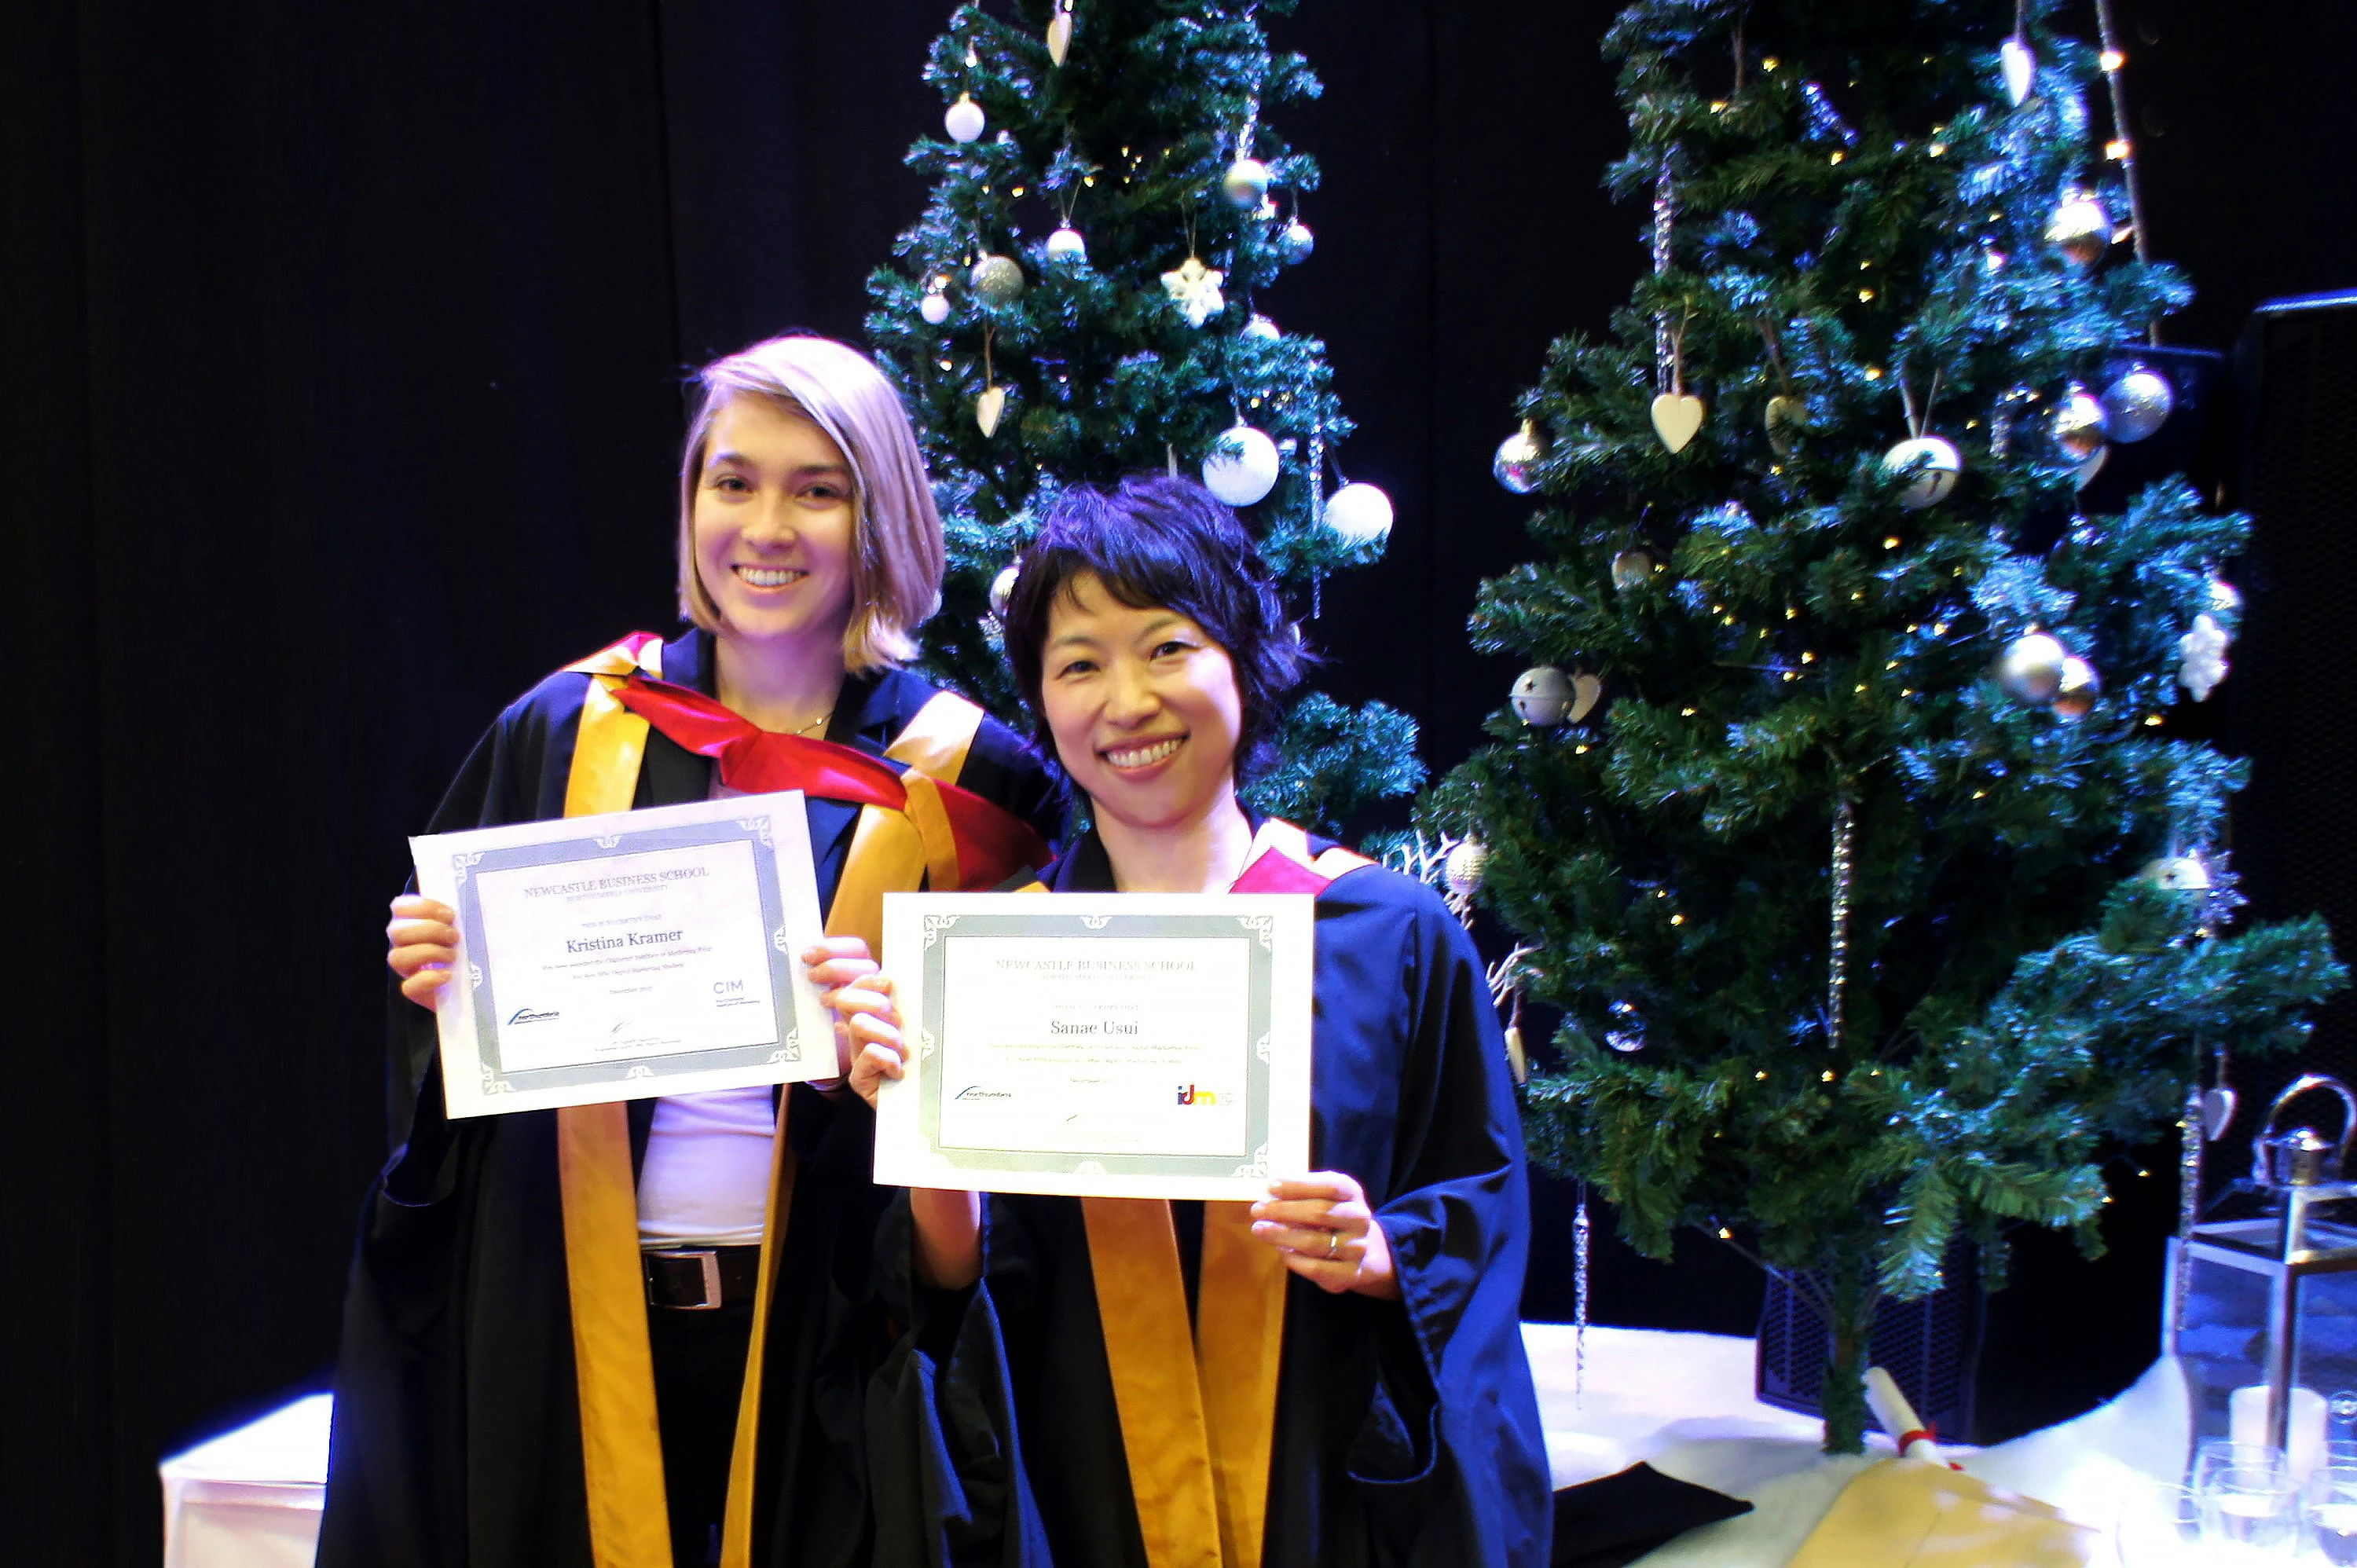 Award-winning students Kristina Kramer (L) and Sanae Usui